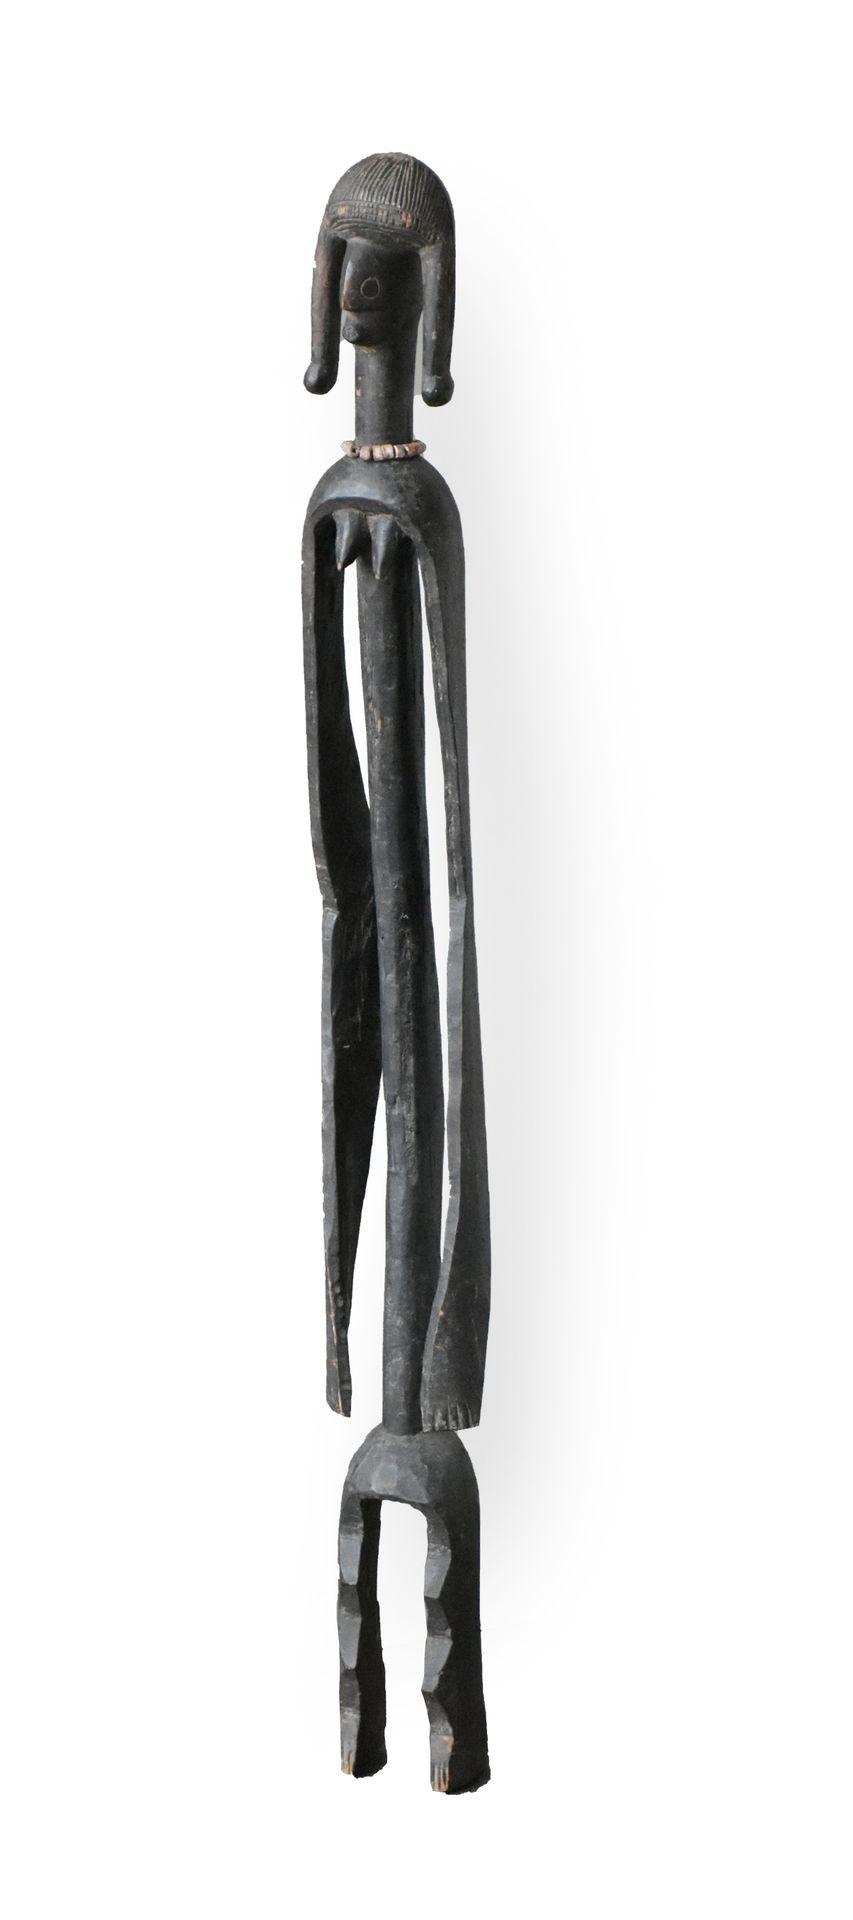 STATUE Mumuye, Nigeria
Madera tallada
Altura: 120 cm